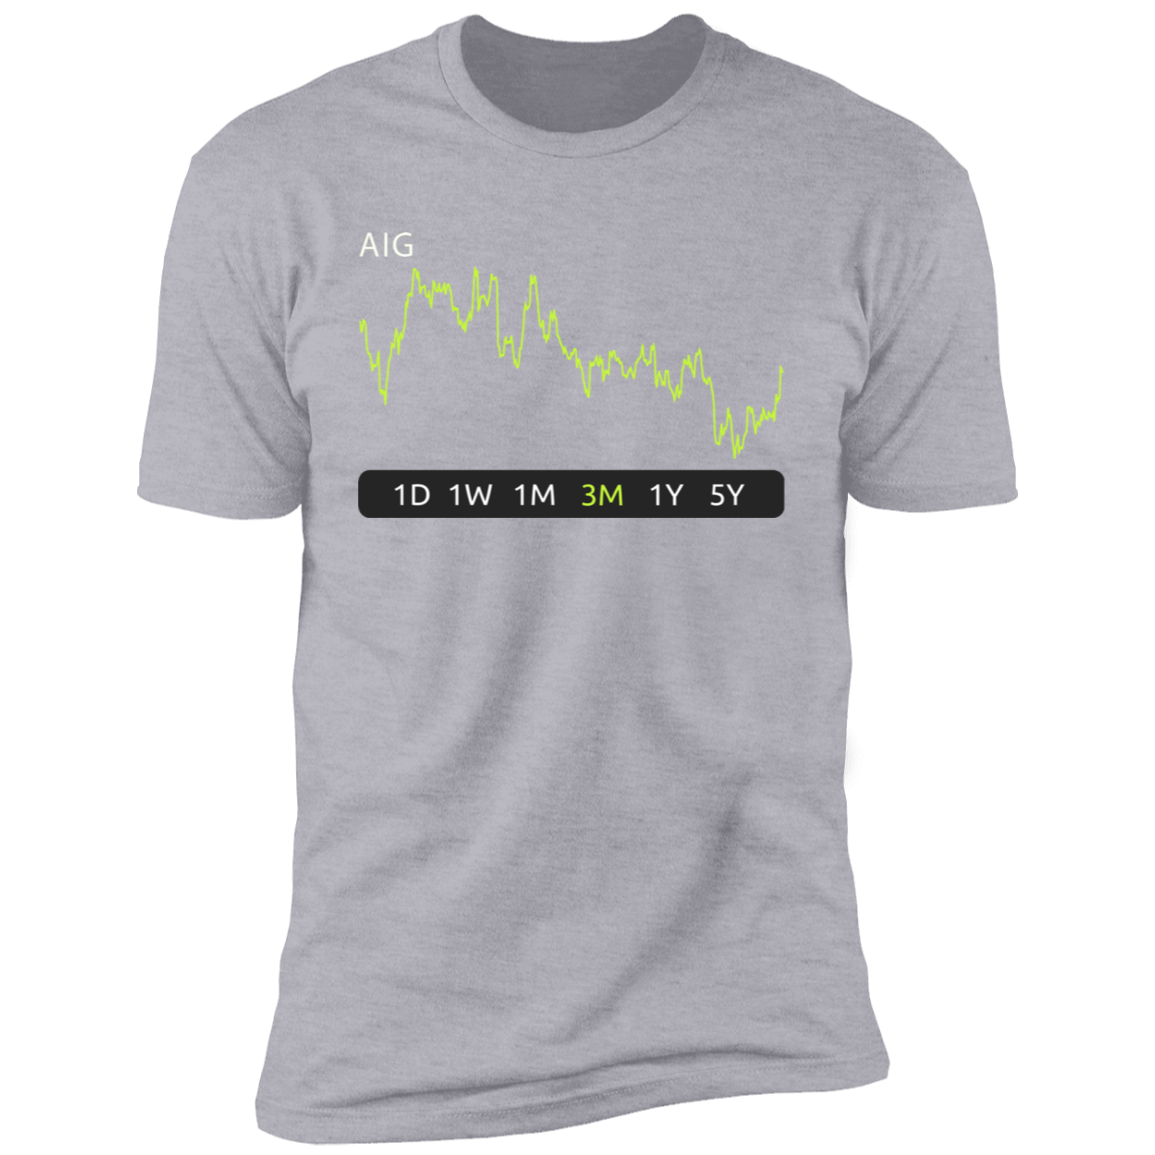 AIG Stock 3m Premium T-Shirt